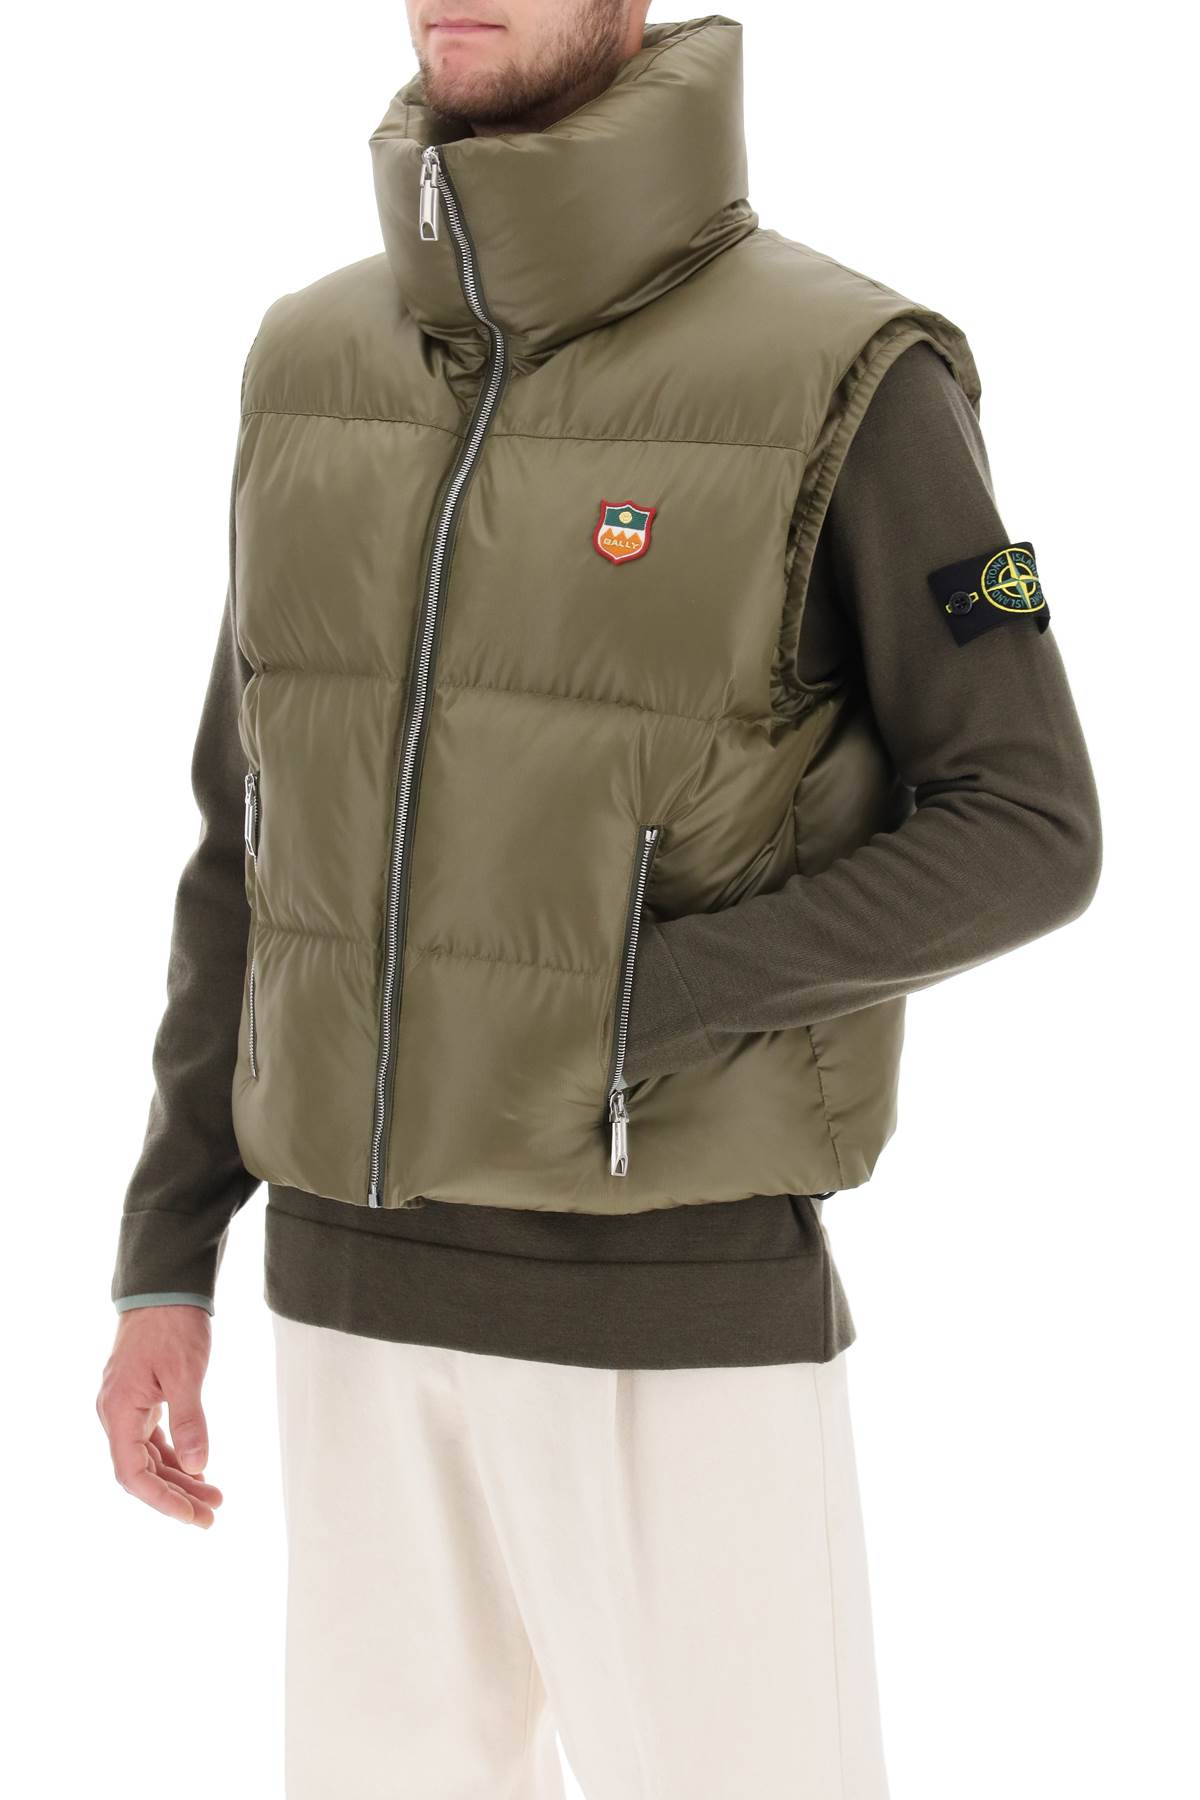 Bally padded vest in ripstop-Bally-Urbanheer